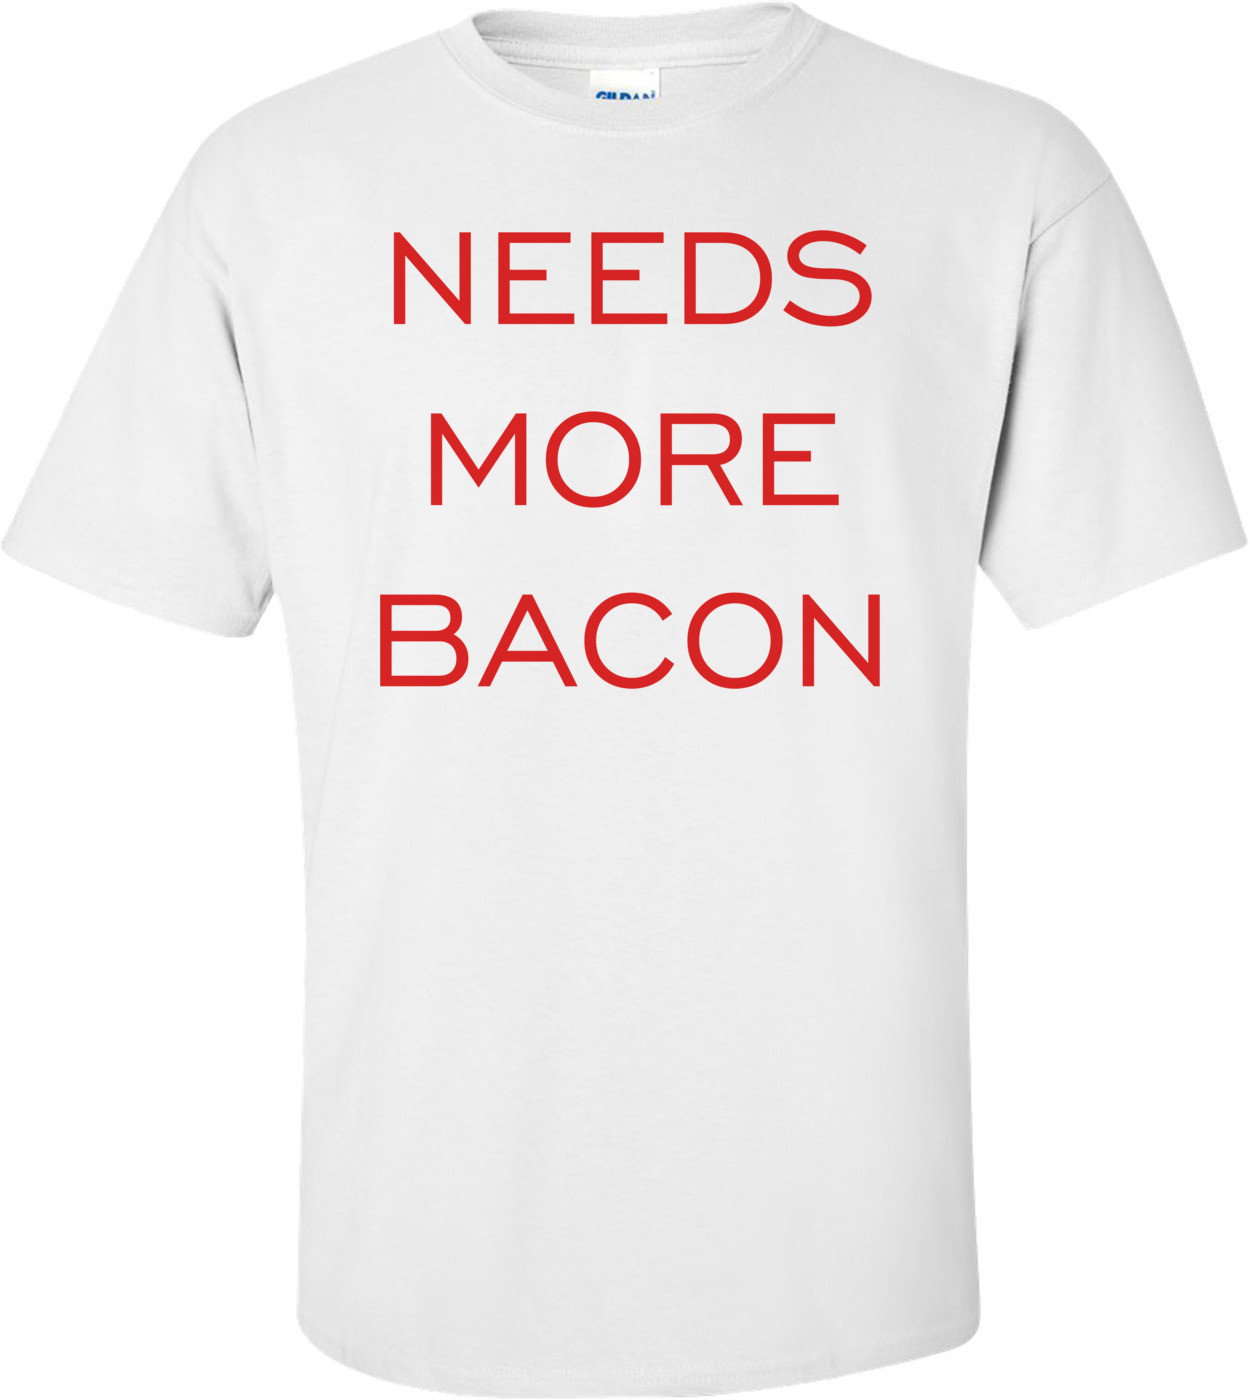 NEEDS MORE BACON Shirt